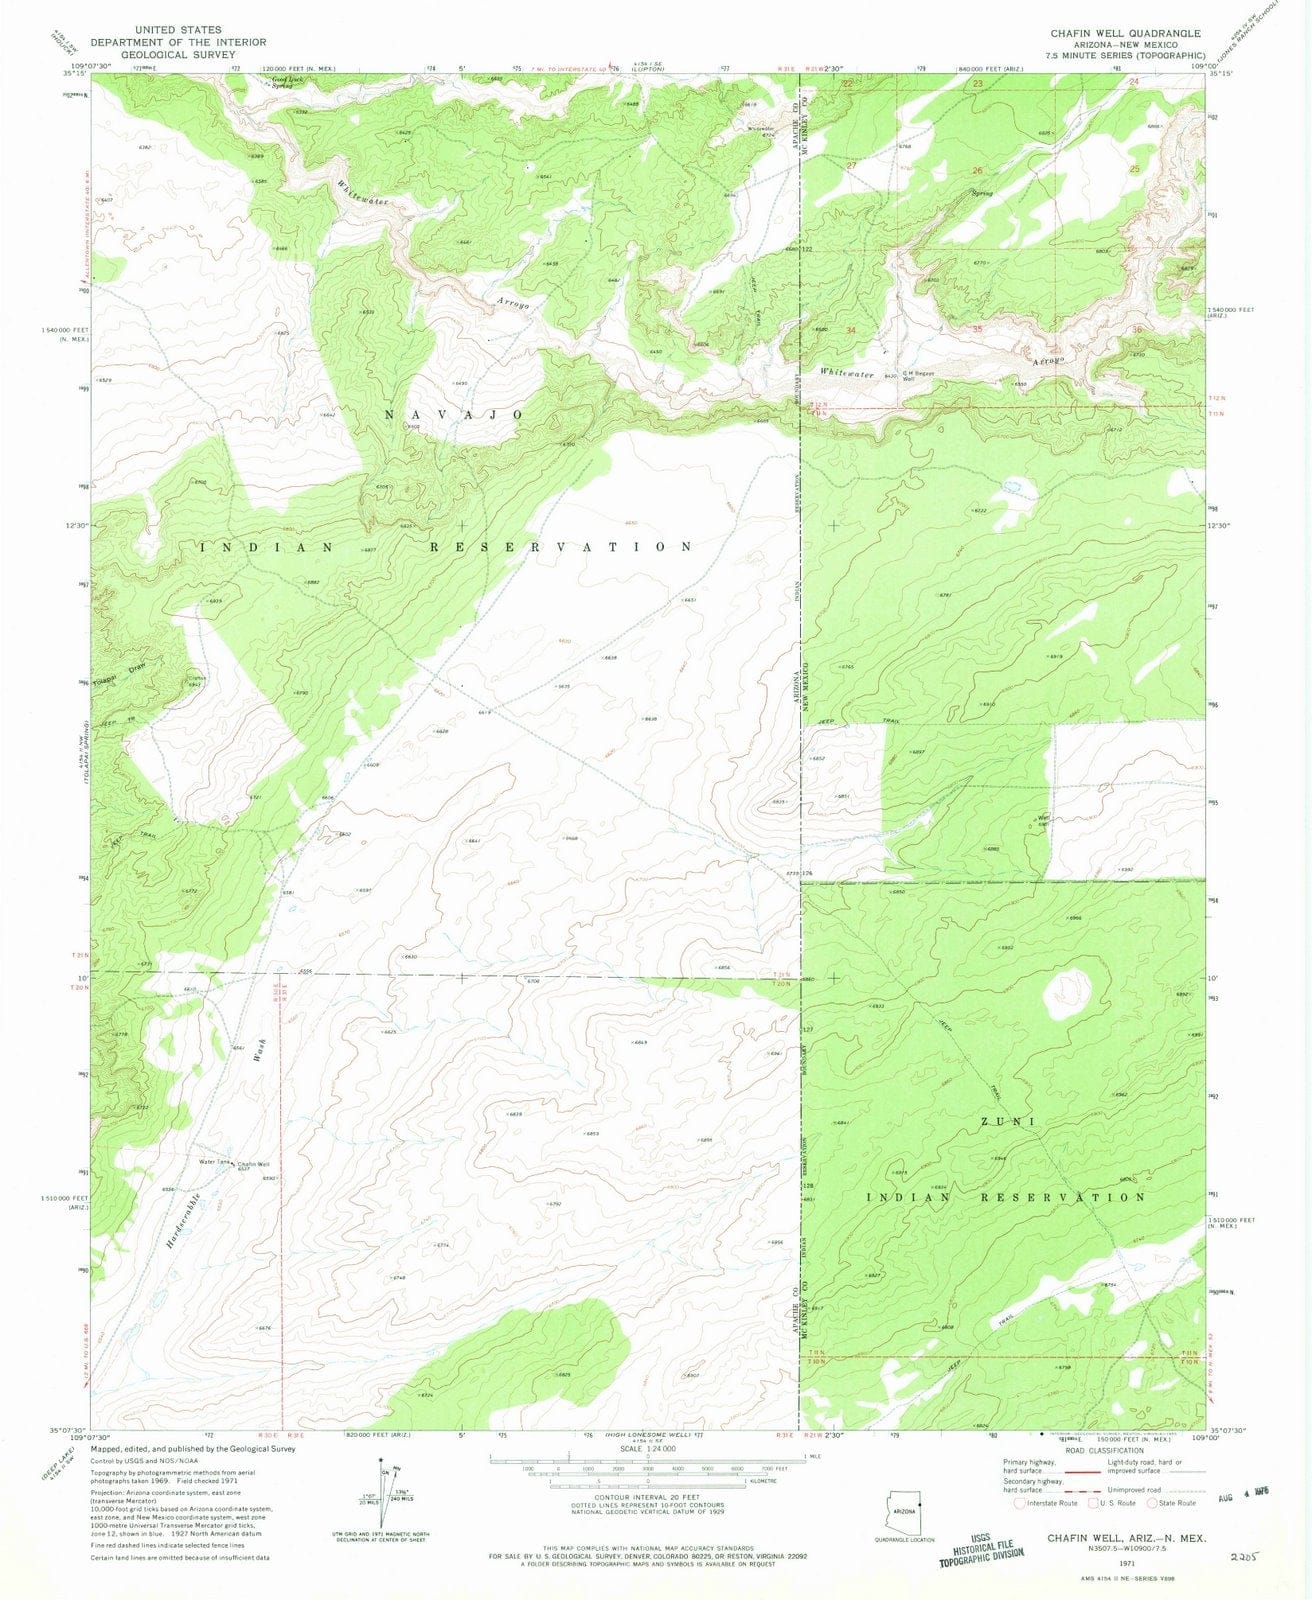 1971 Chafin Well, AZ - Arizona - USGS Topographic Map